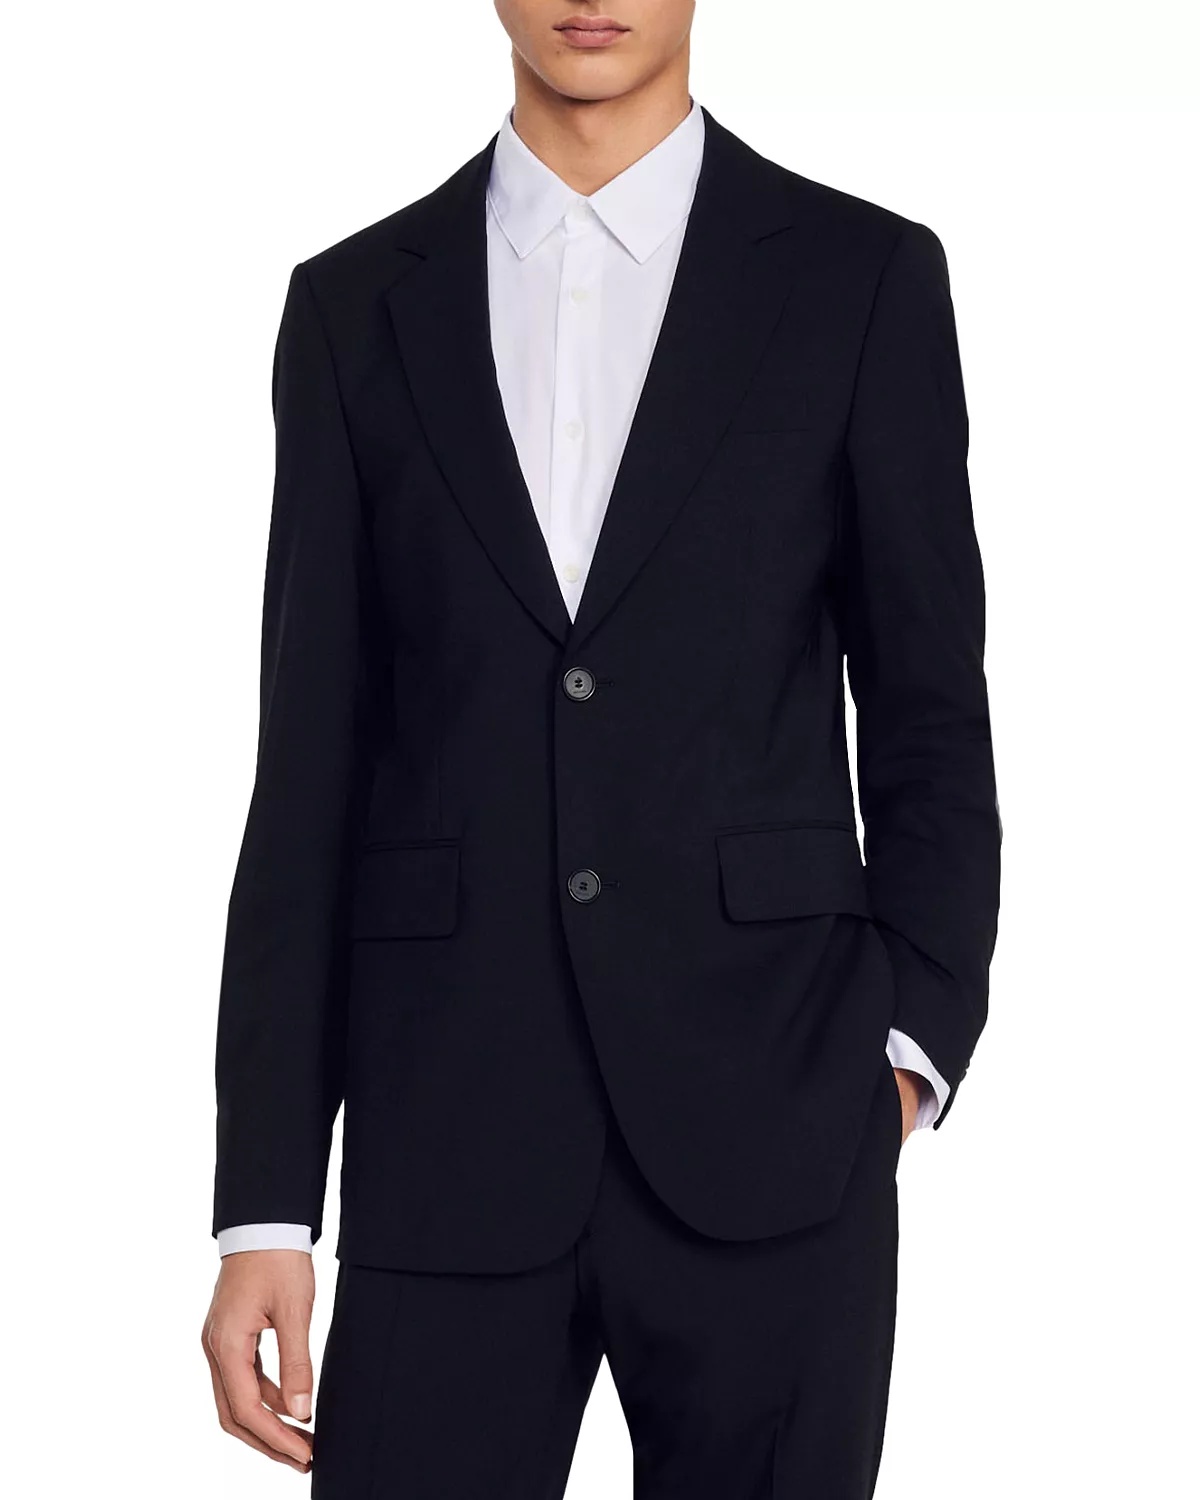 Formal Suit Jacket - 1